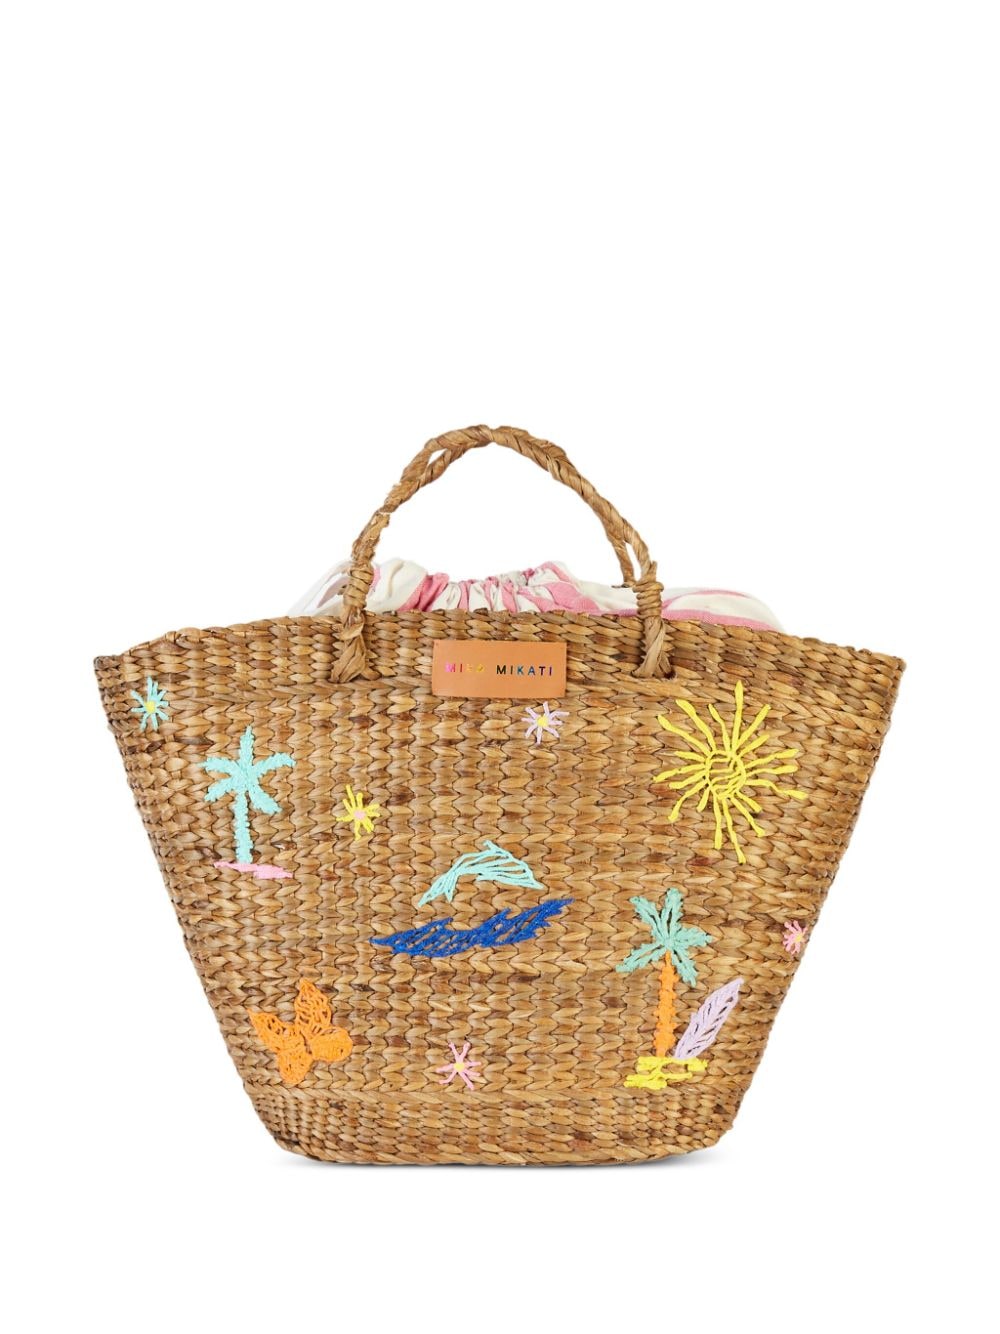 Mira Mikati Embroidered Beach Bag In Brown